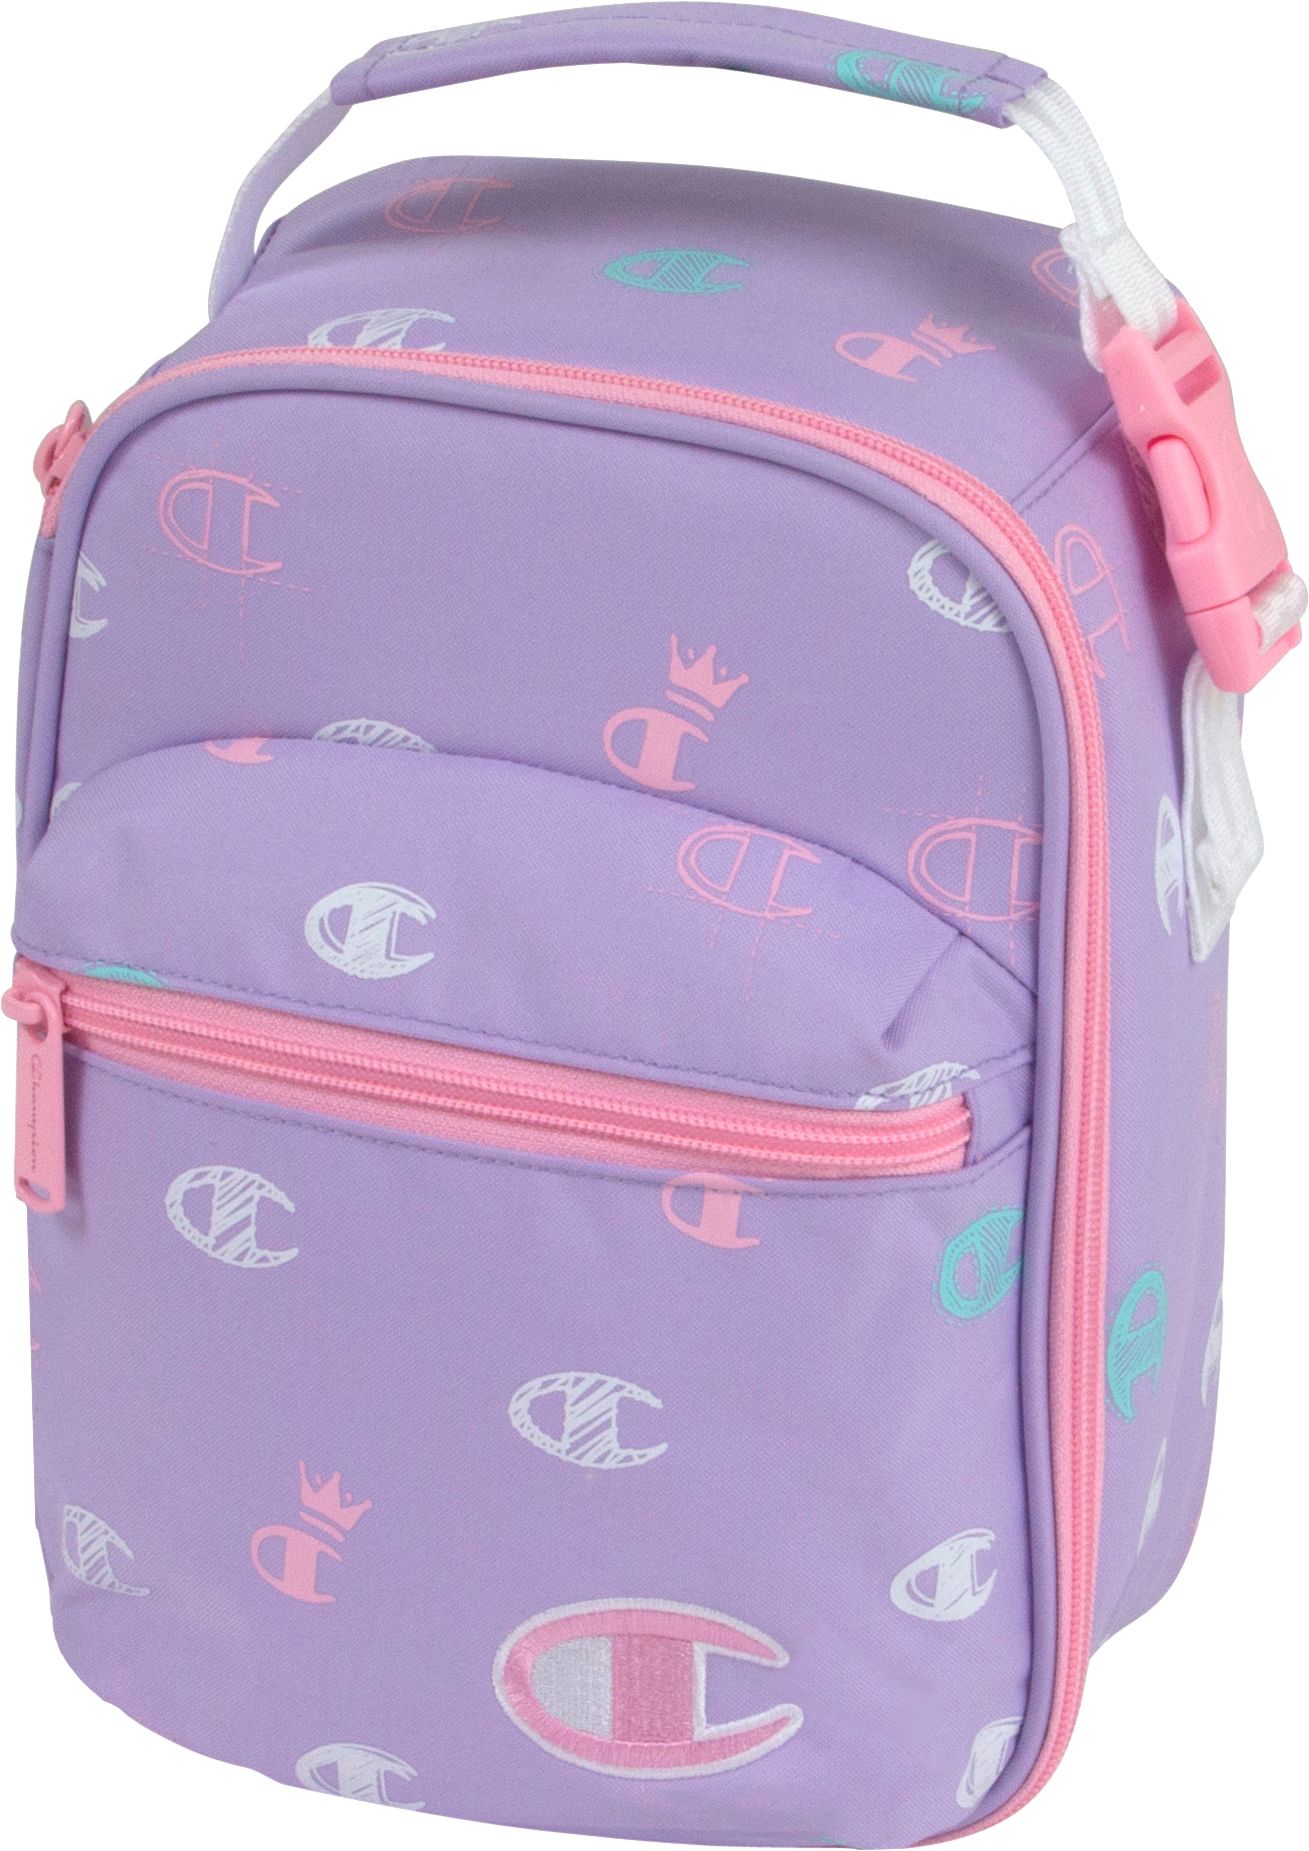 purple champion backpack